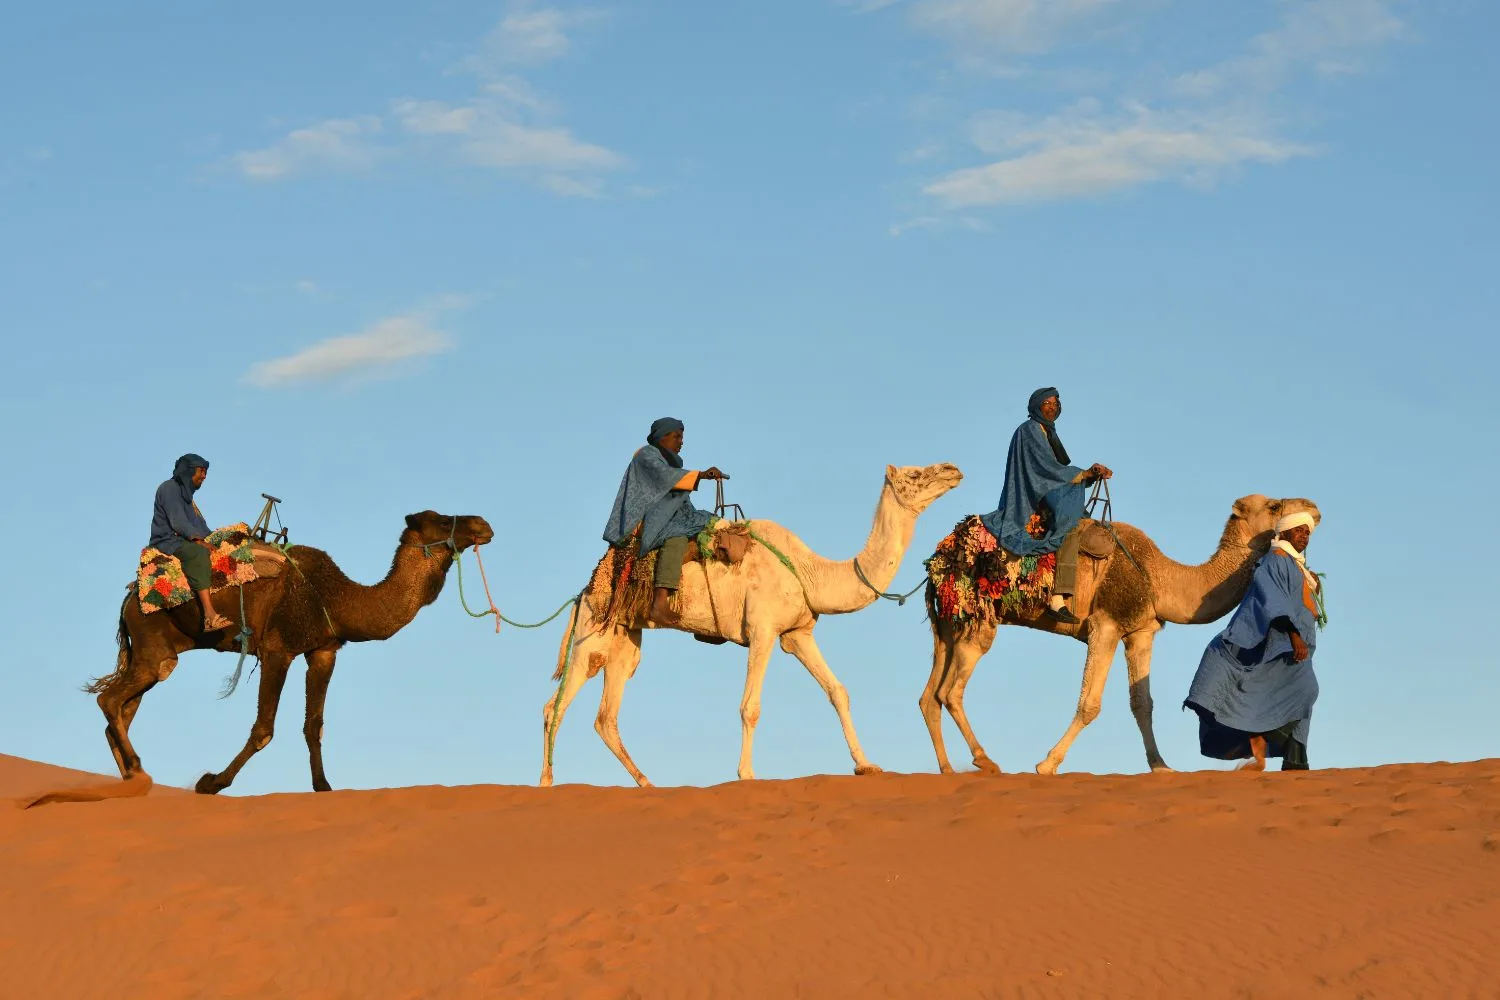 A camel caravan in the dessert of Morocco 